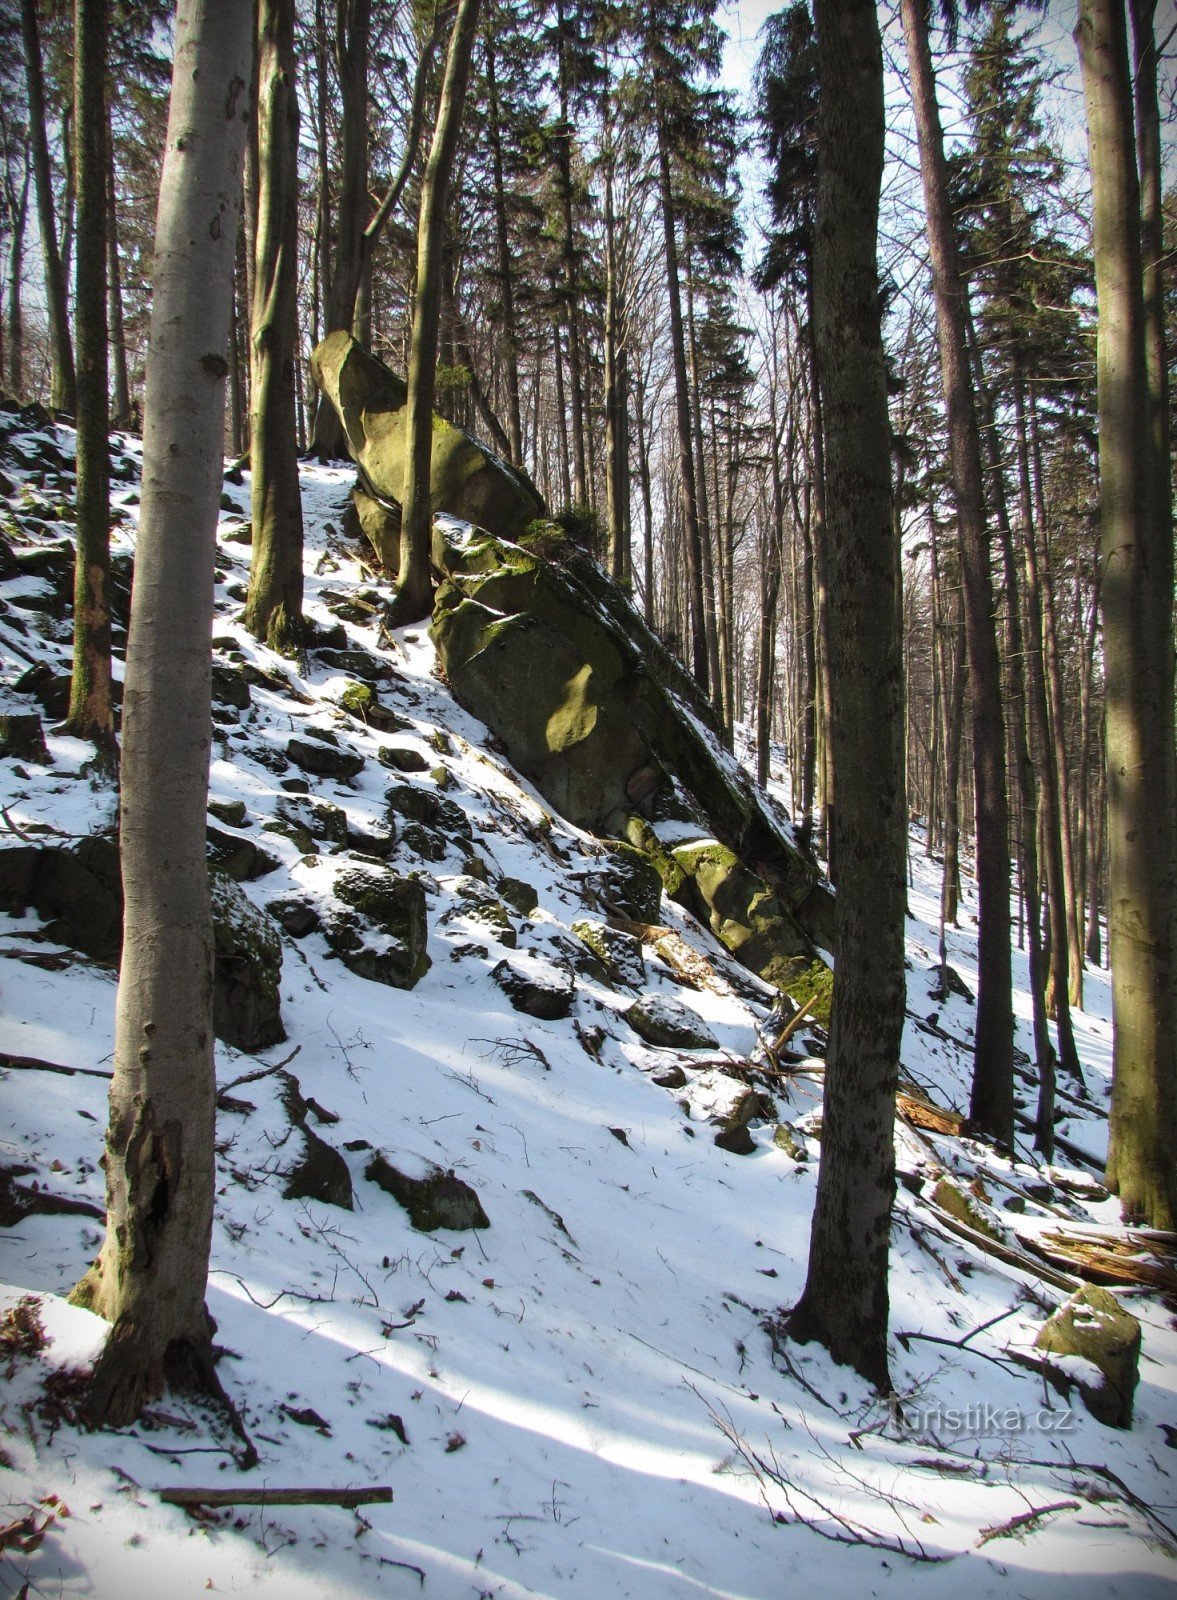 Držková - ホリーコフ保護区の岩